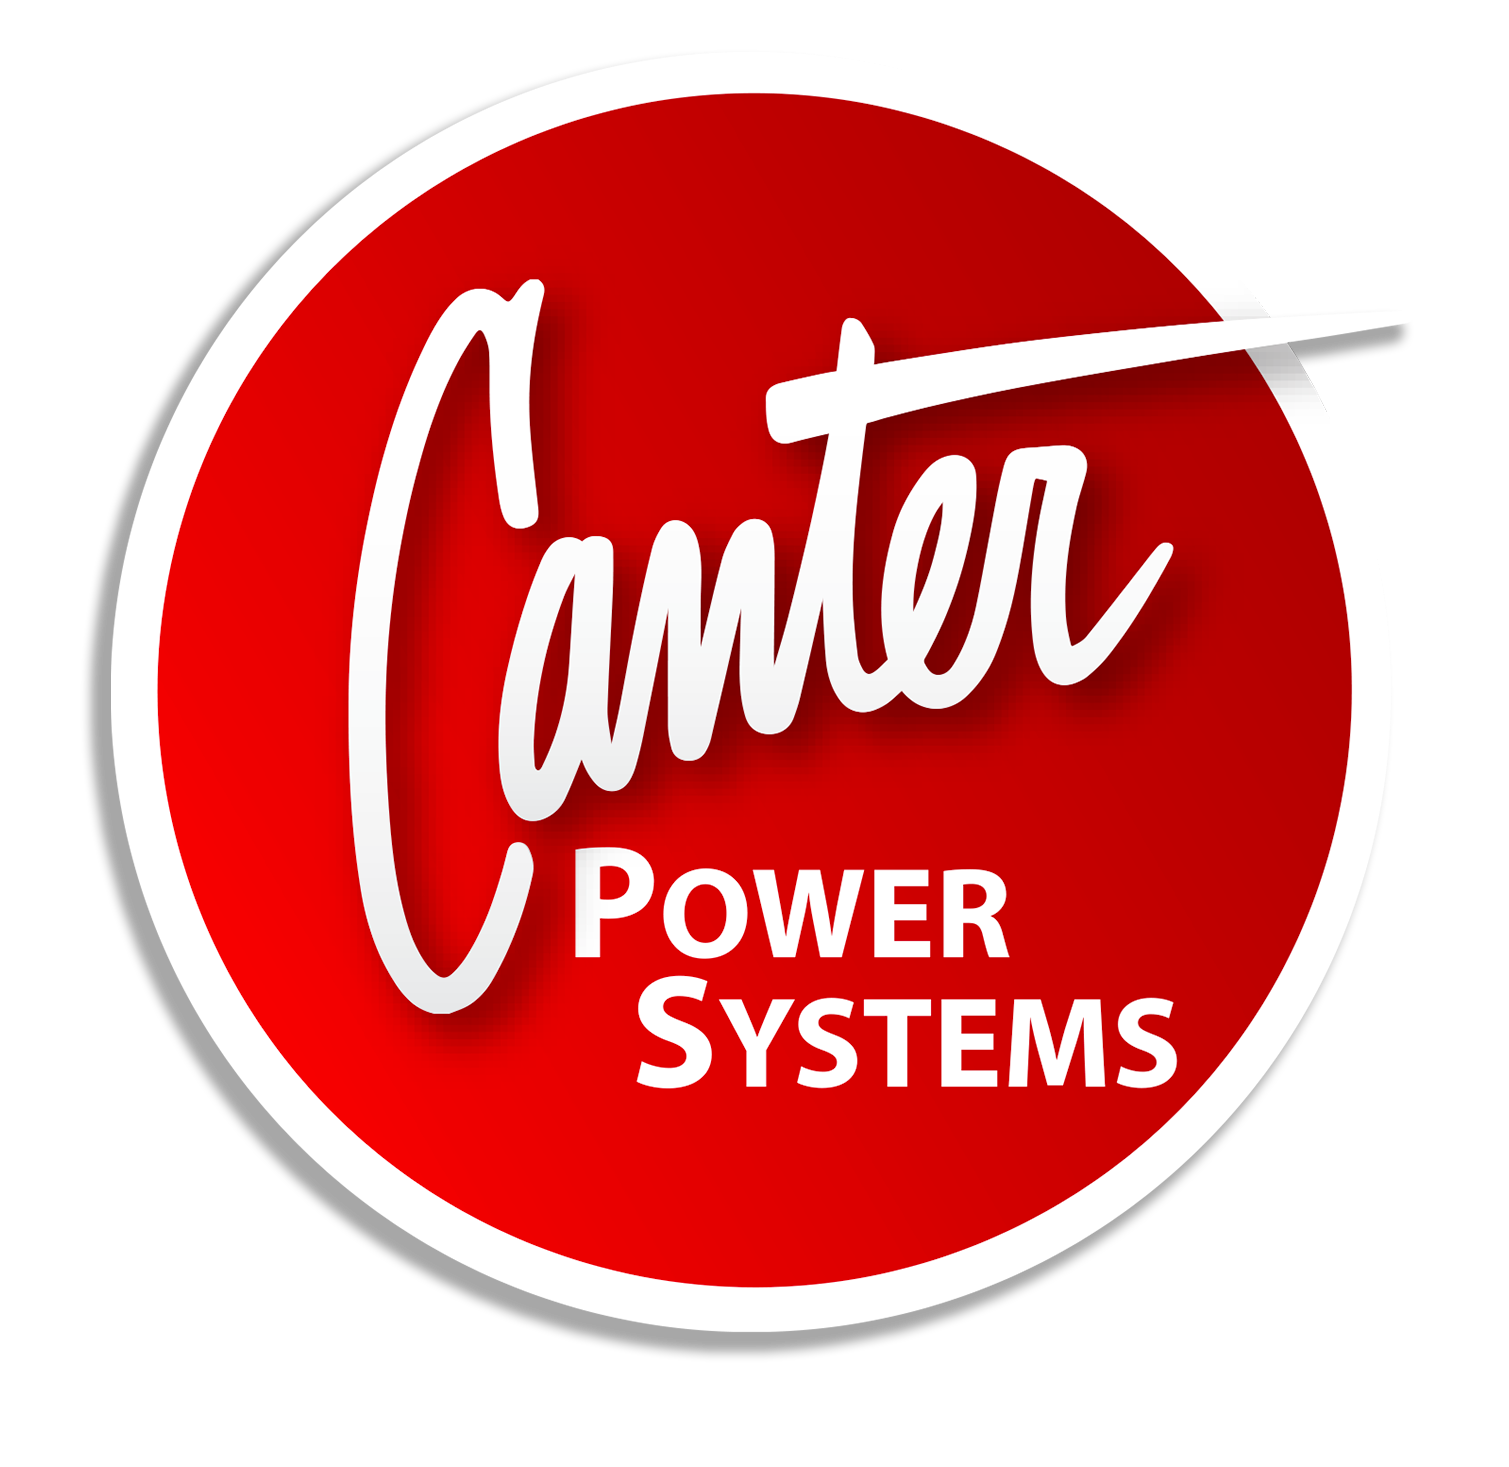 Canter Power red circle logo